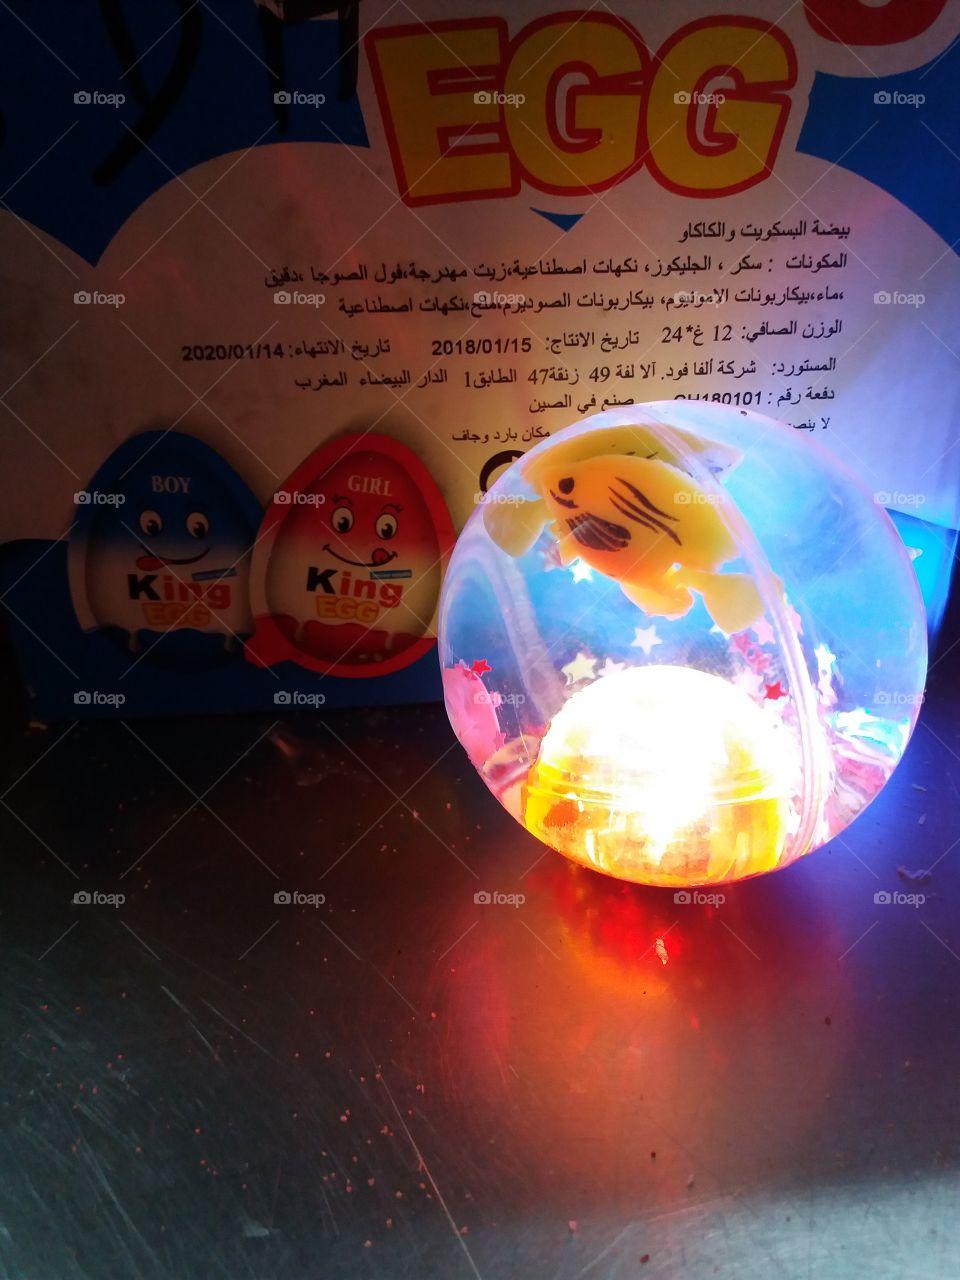 Kinder eggs#light#night#fish#color#game#ball#A burning ball